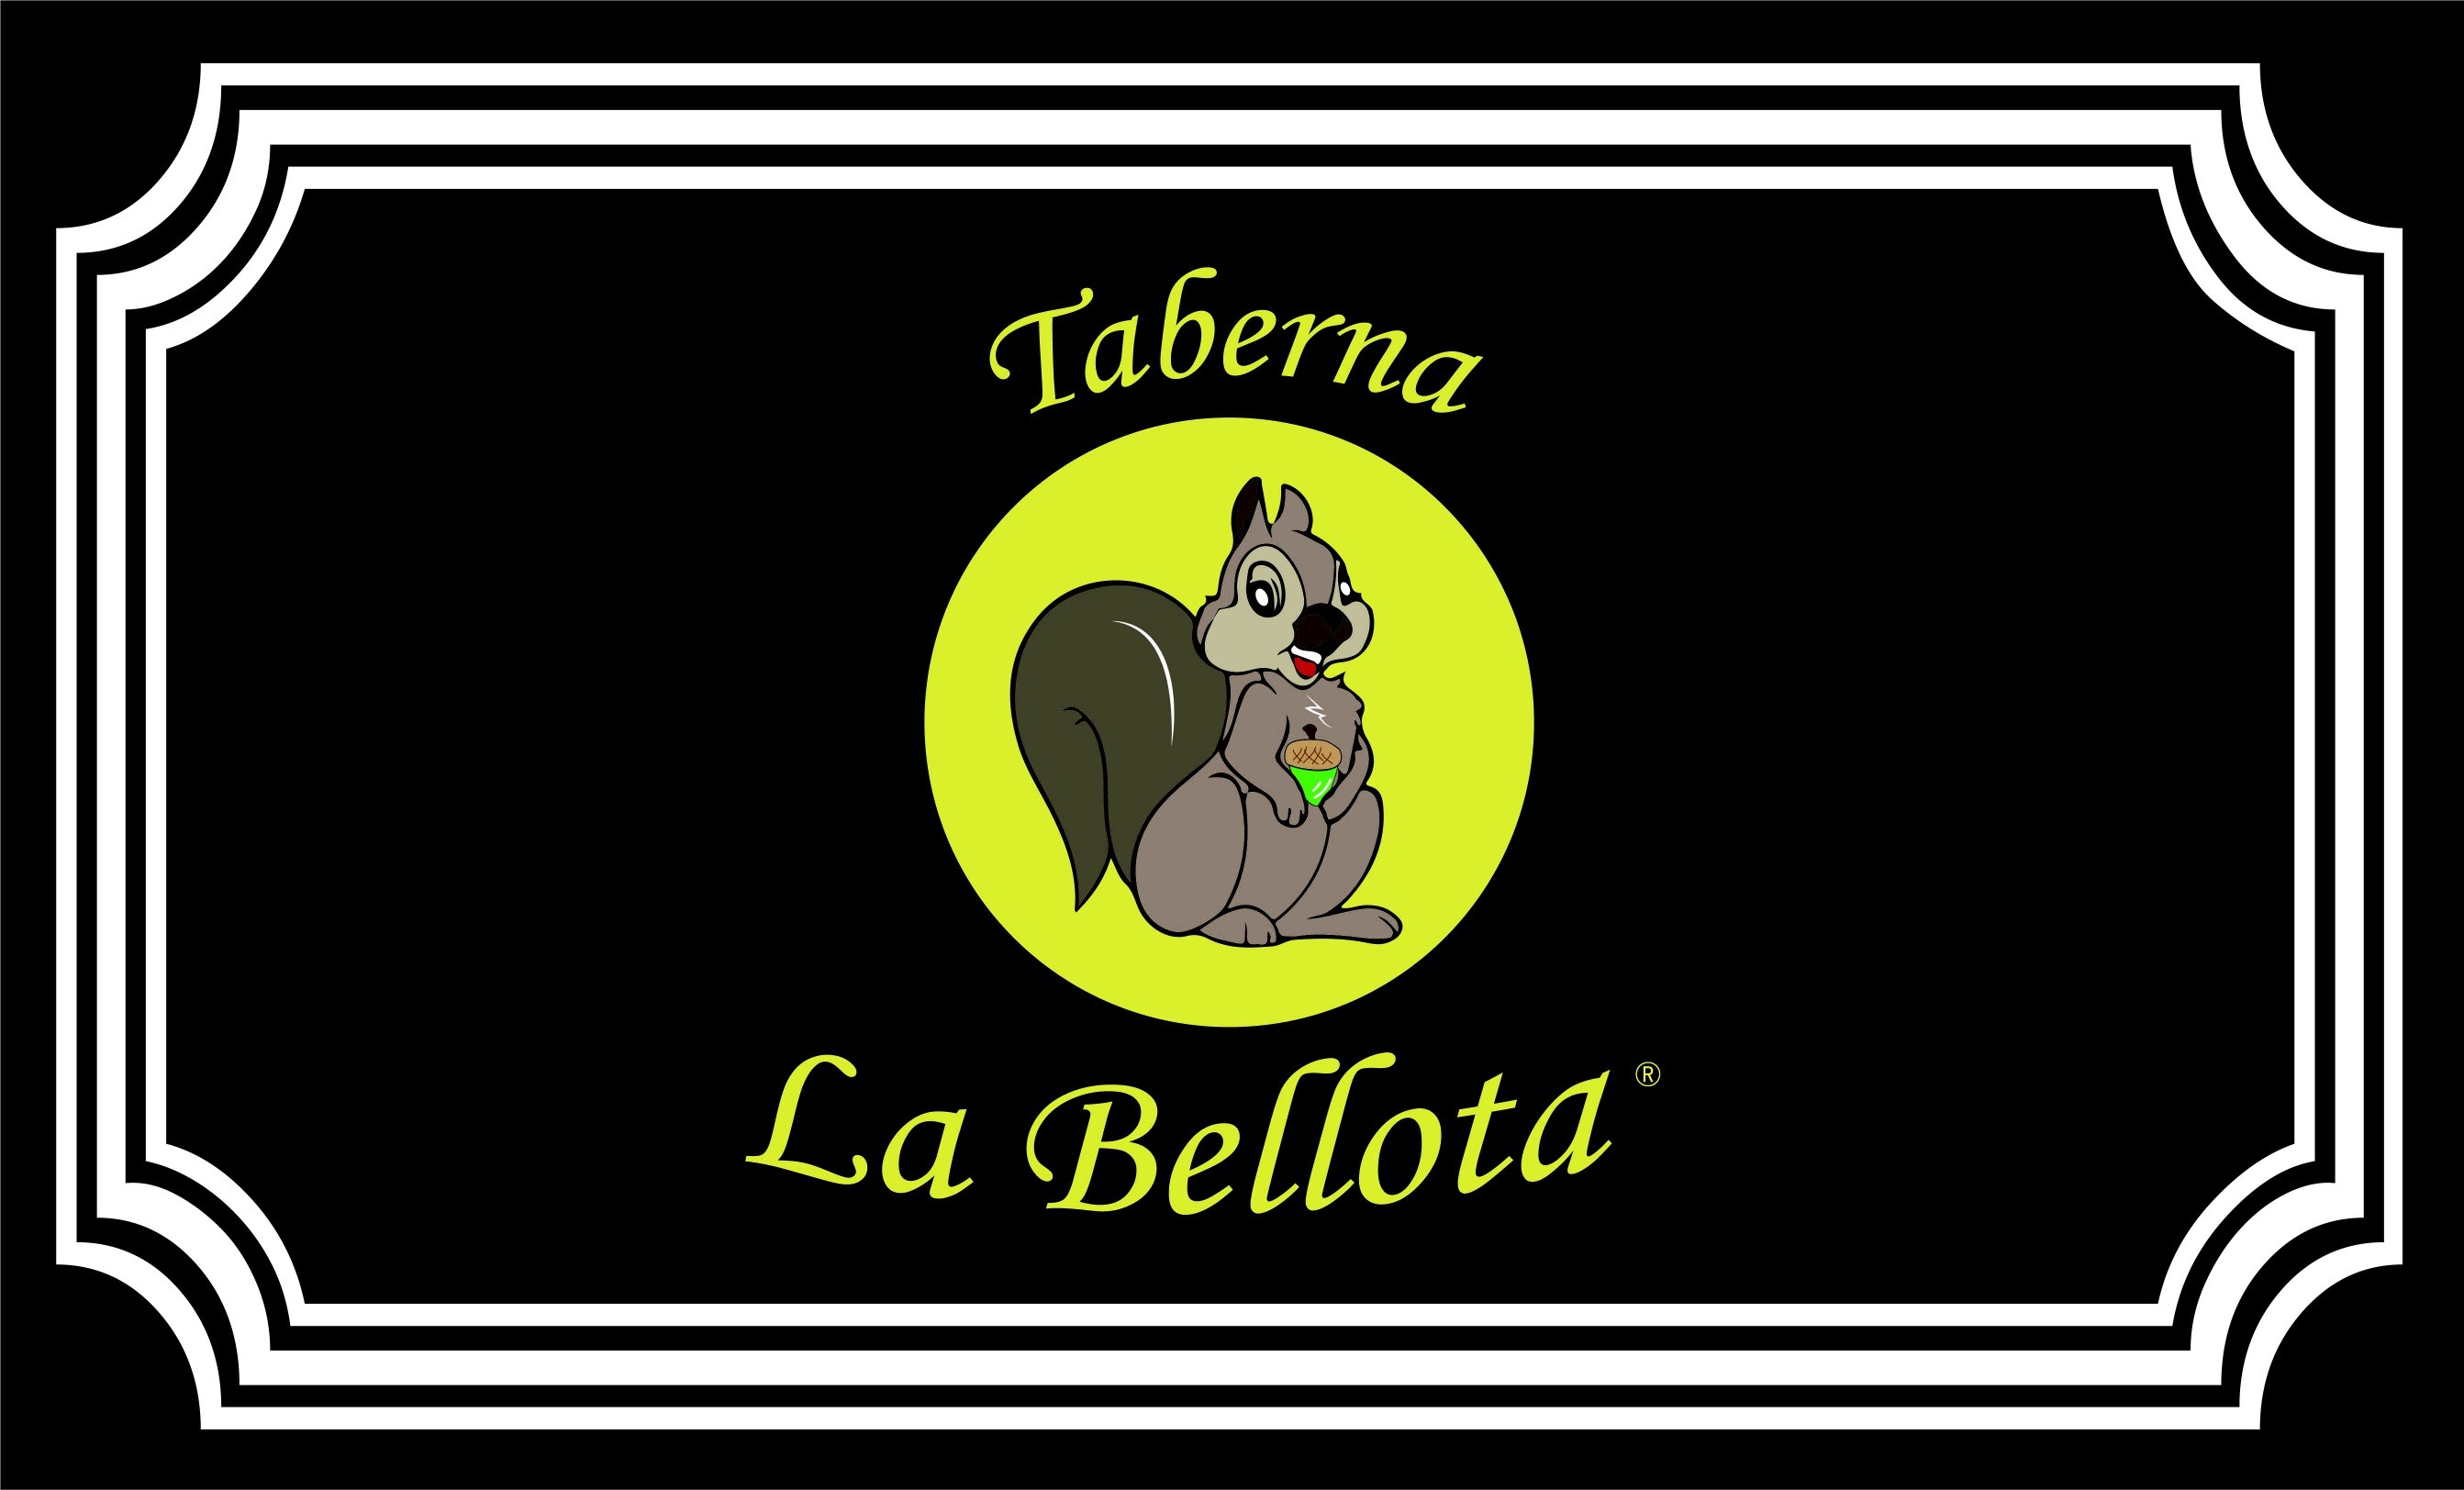 Taberna La Bellota